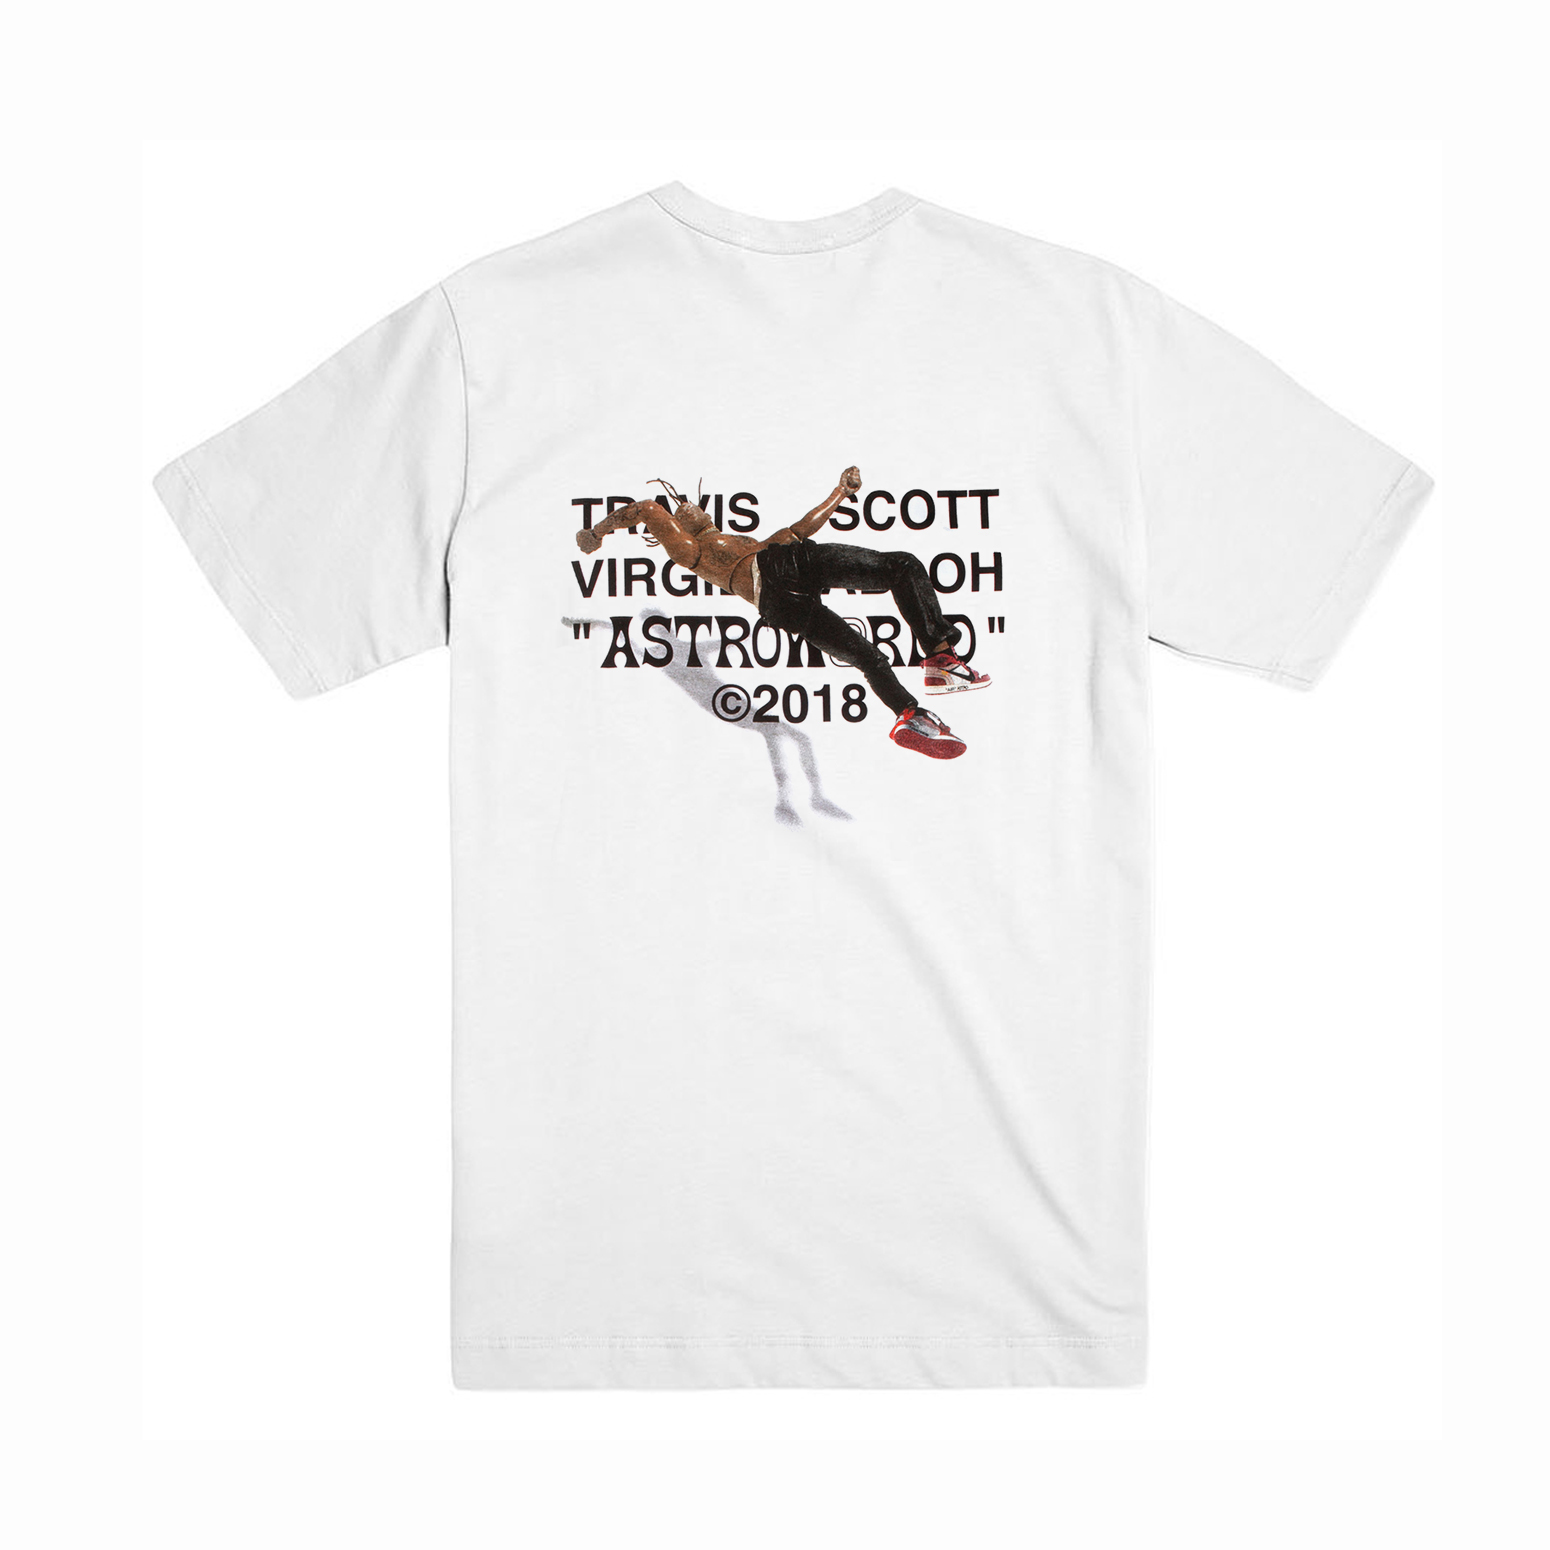 Travis Scott x Virgil Abloh Astroworld NYC T Shirt Back (BSM)